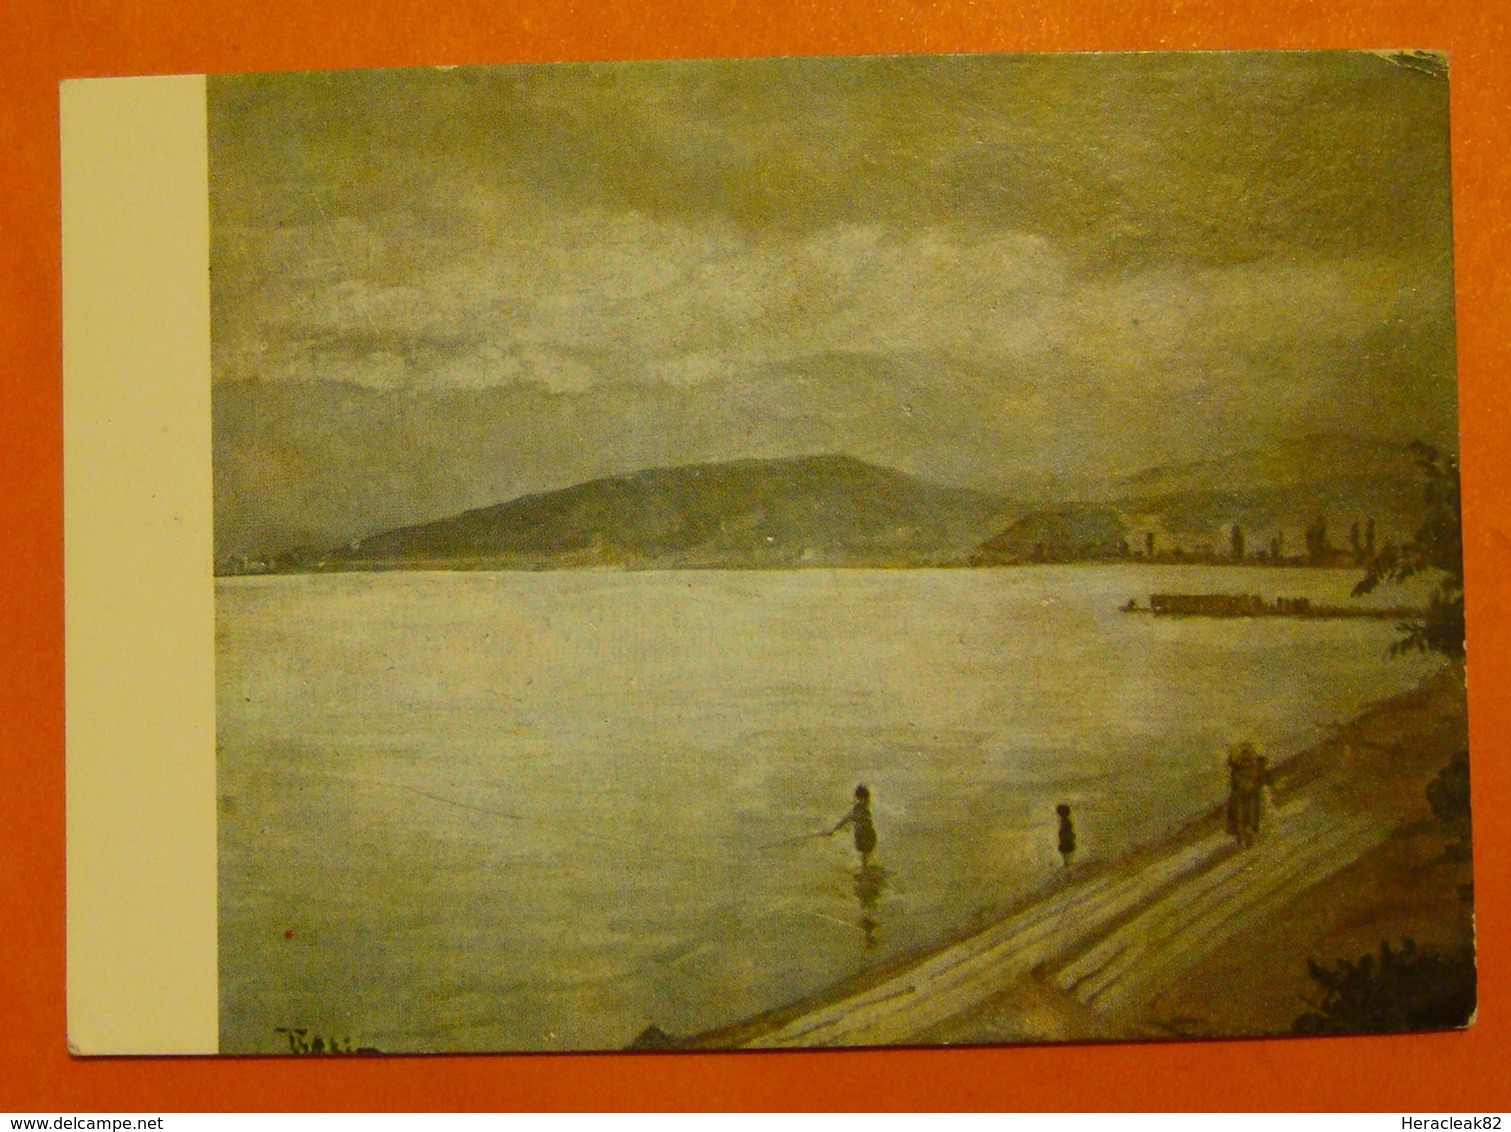 Albania Exhibition Of Paintings In TIRANA "POGRADEC IN RAIN" By Vangjush Mio, Oil 1973, UNUSED Excellent Quality. - Albanie